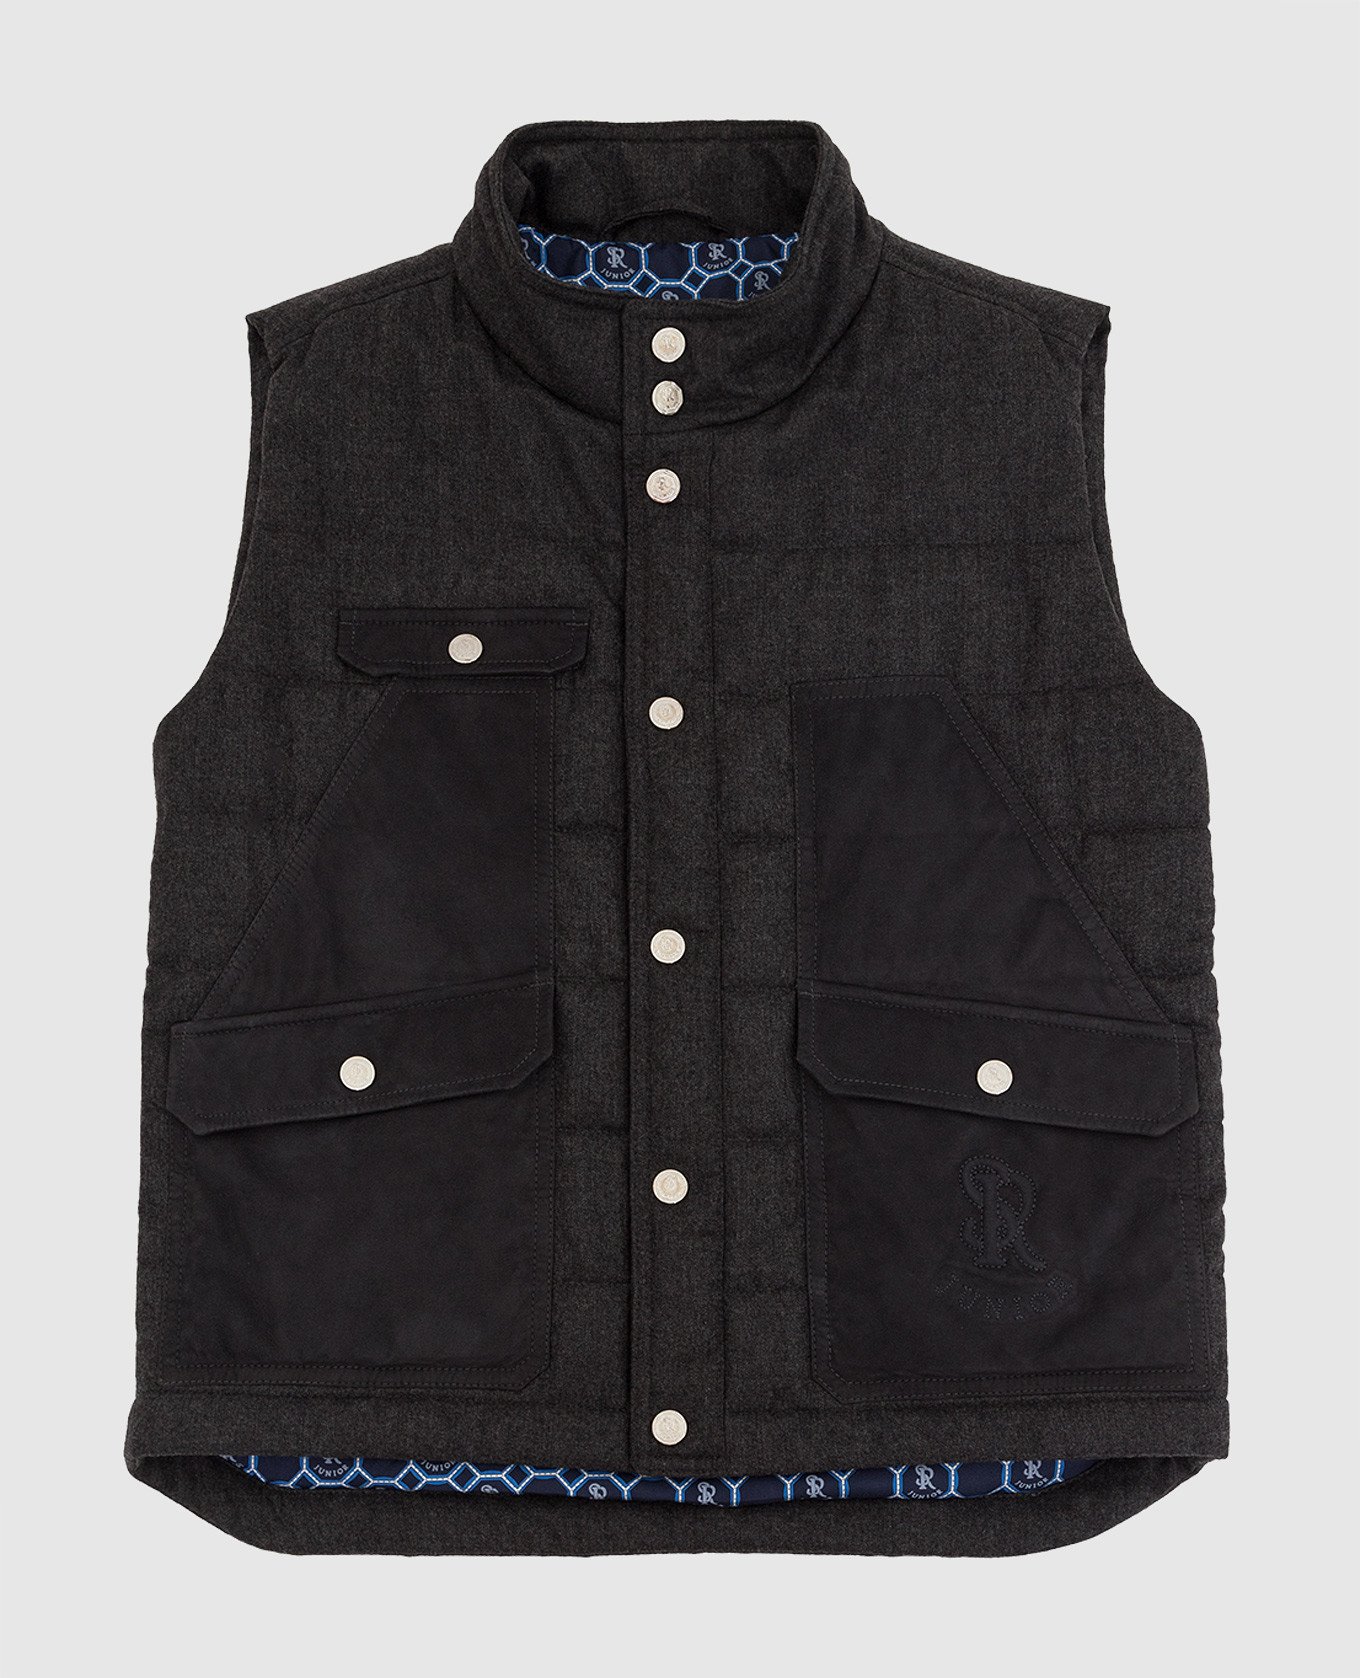 Children's wool vest with suede inserts